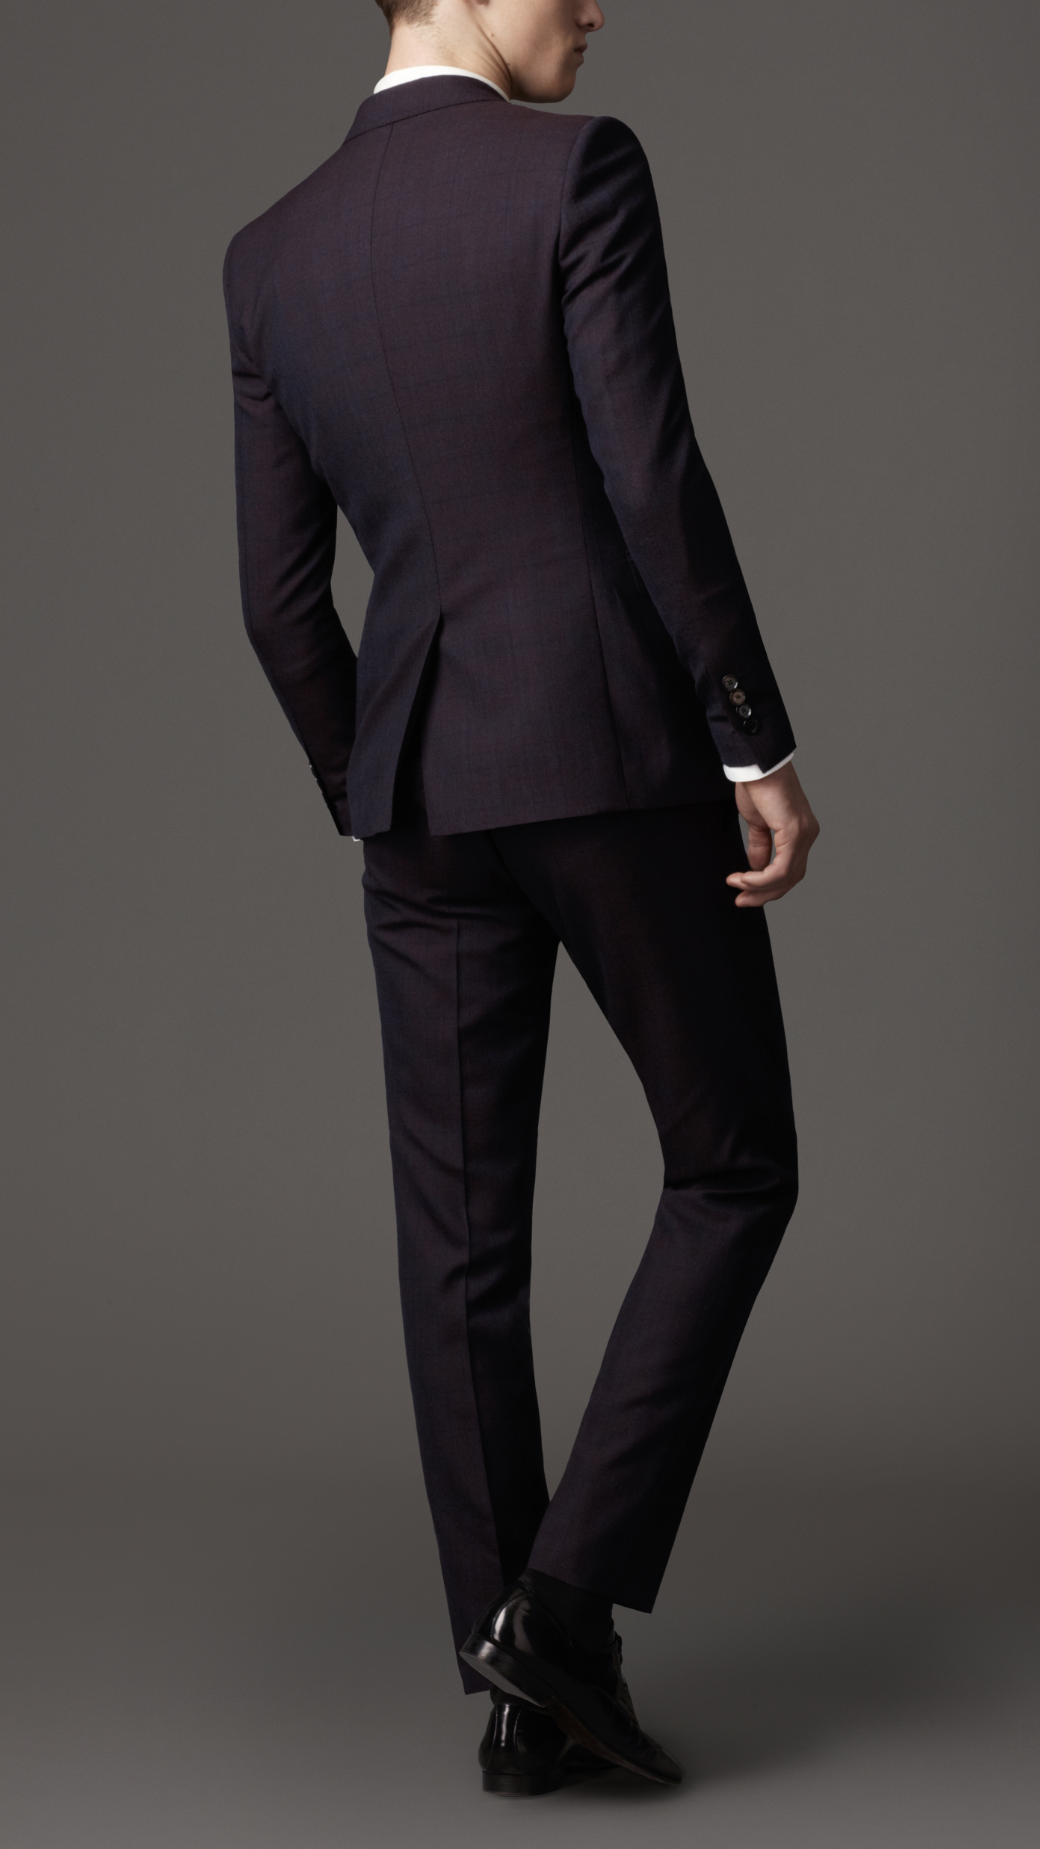 Lyst - Burberry Slim Fit Glen Check Wool Suit in Black for Men